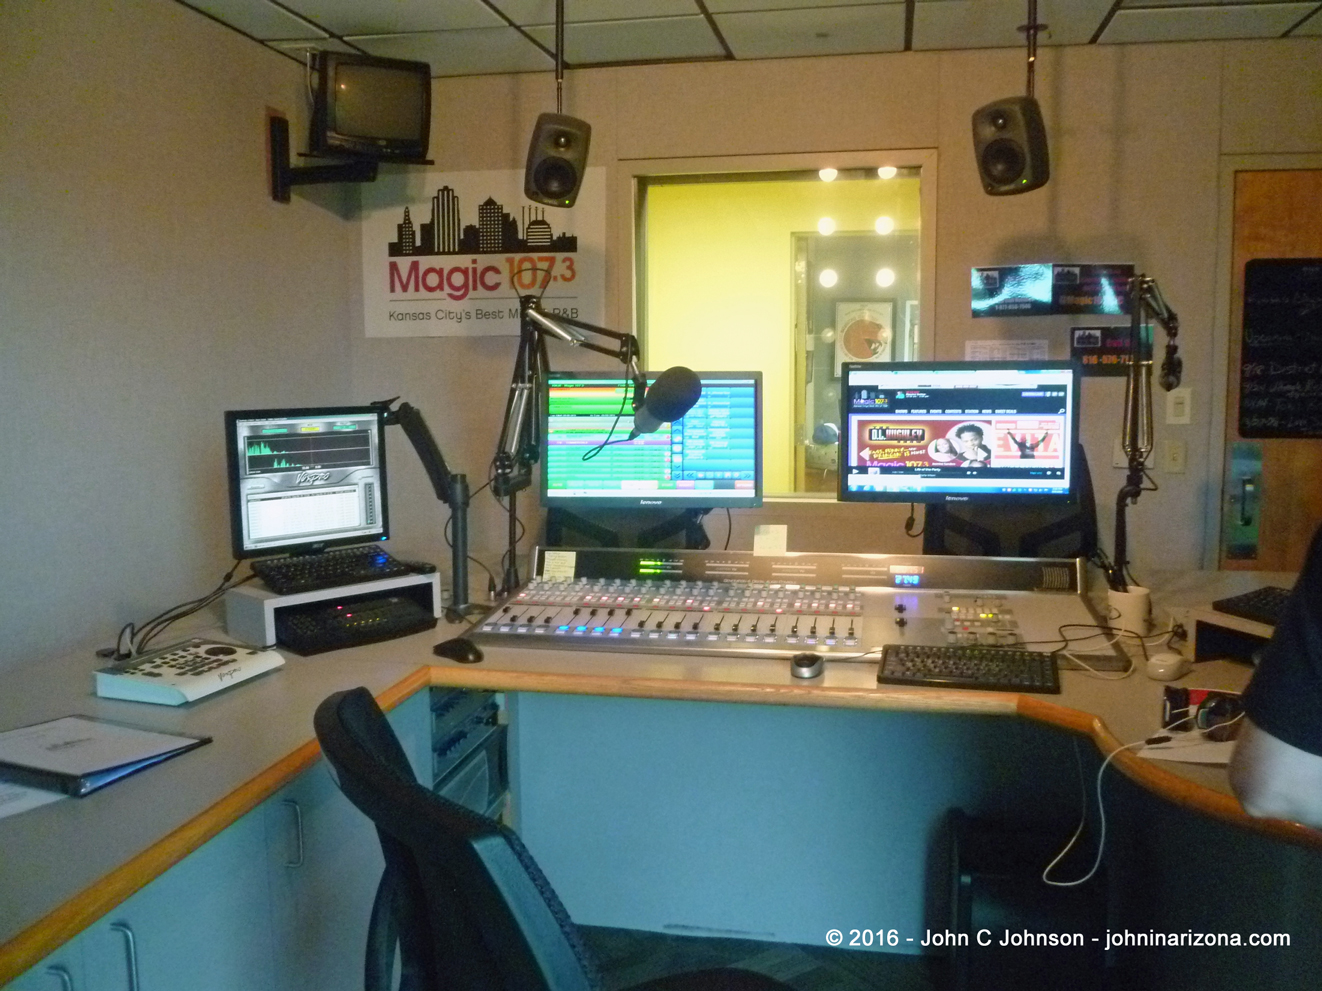 KMJK FM Radio Kansas City, Missouri